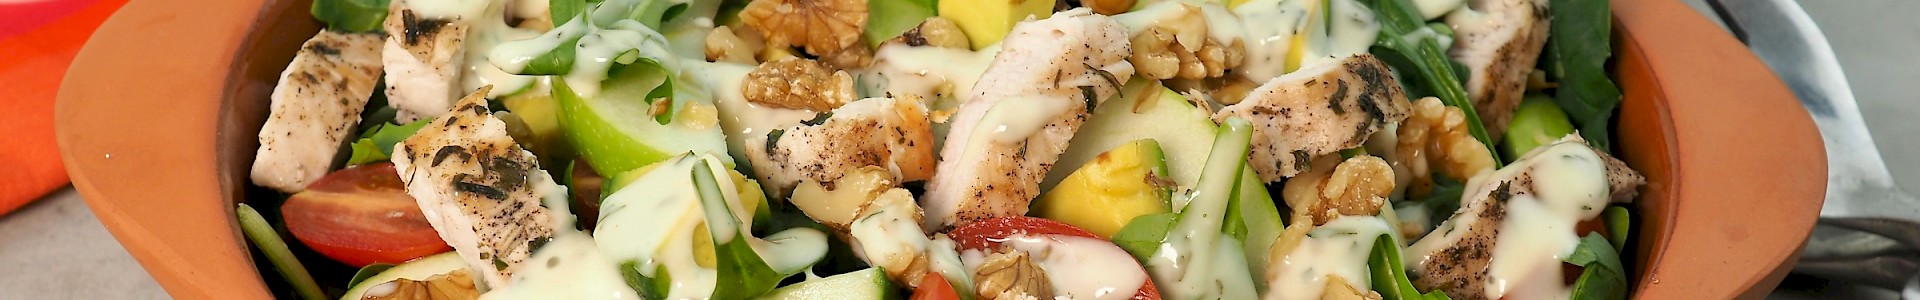 Tarragon Chicken with Waldorf Salad